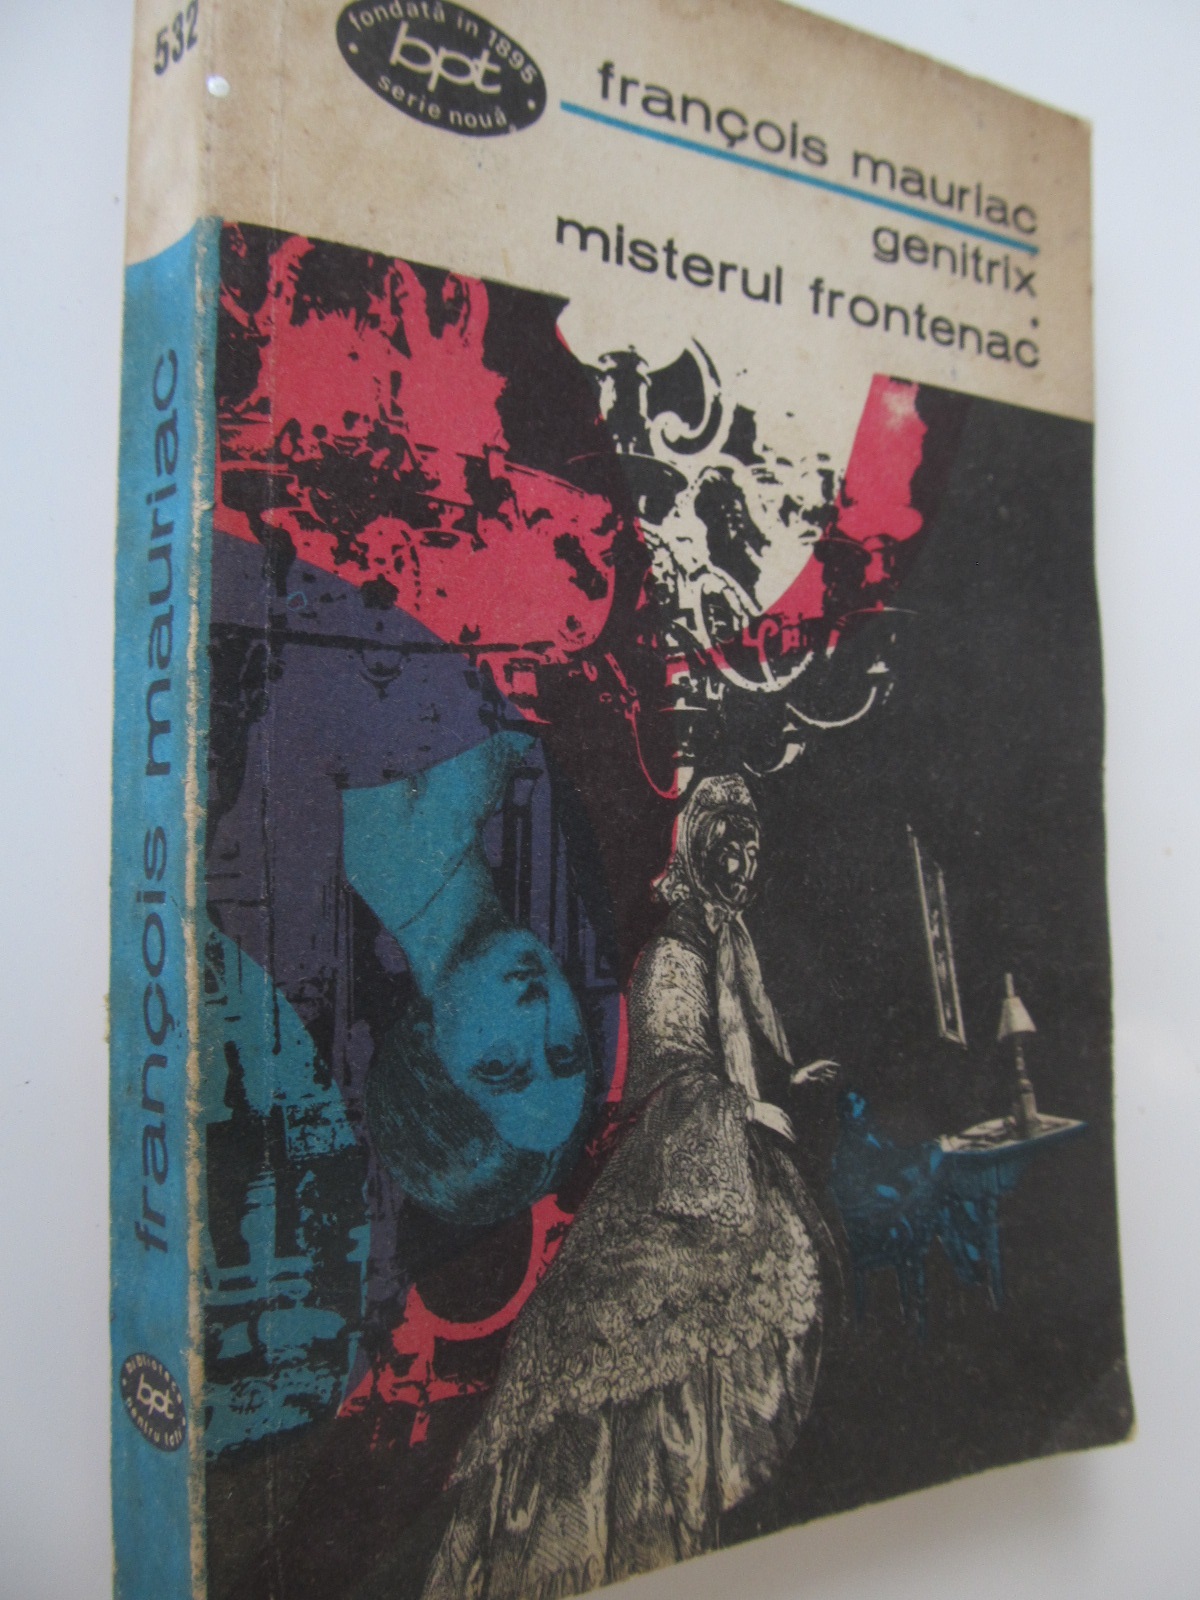 Genitrix - Misterul Frontenac - Francois Mauriac | Detalii carte